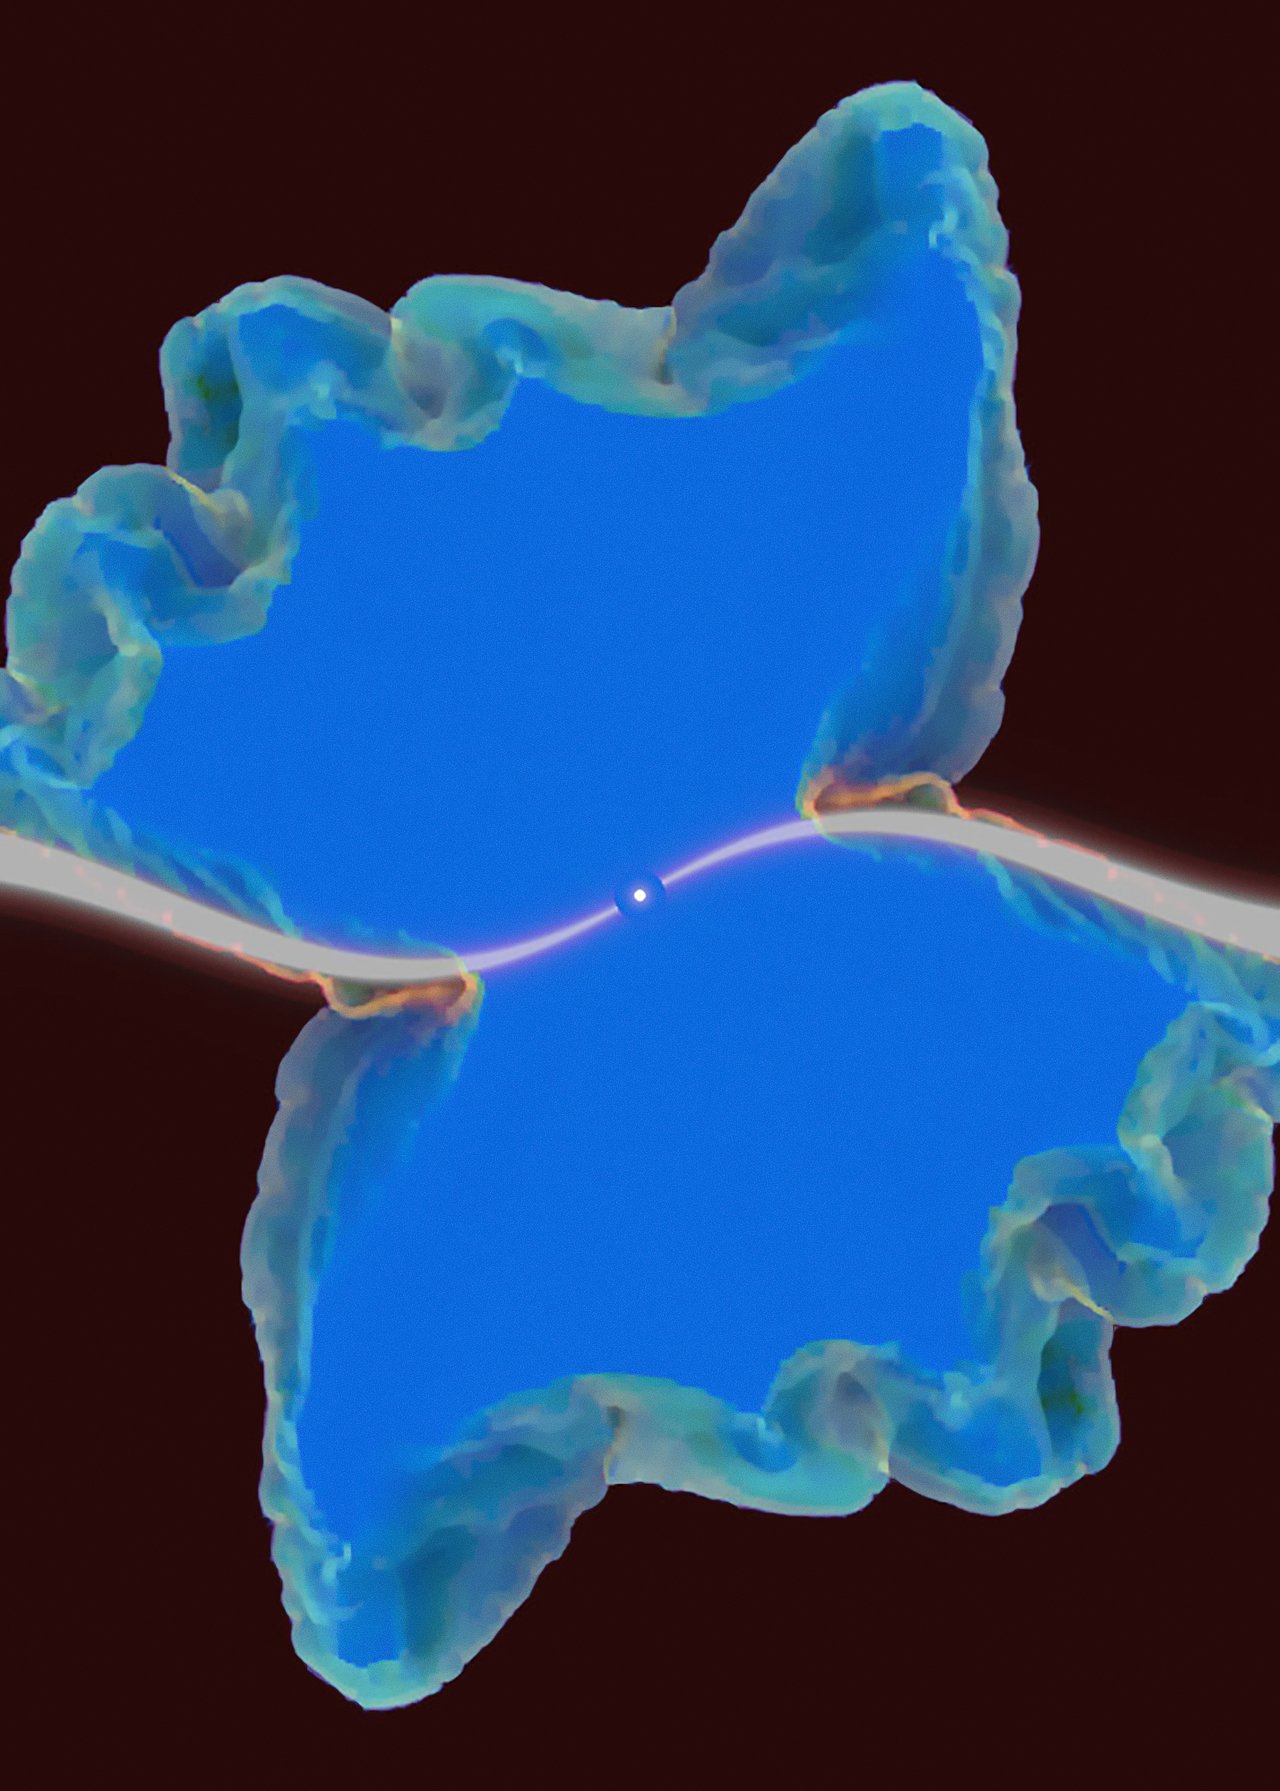 Simulation of planetary nebula